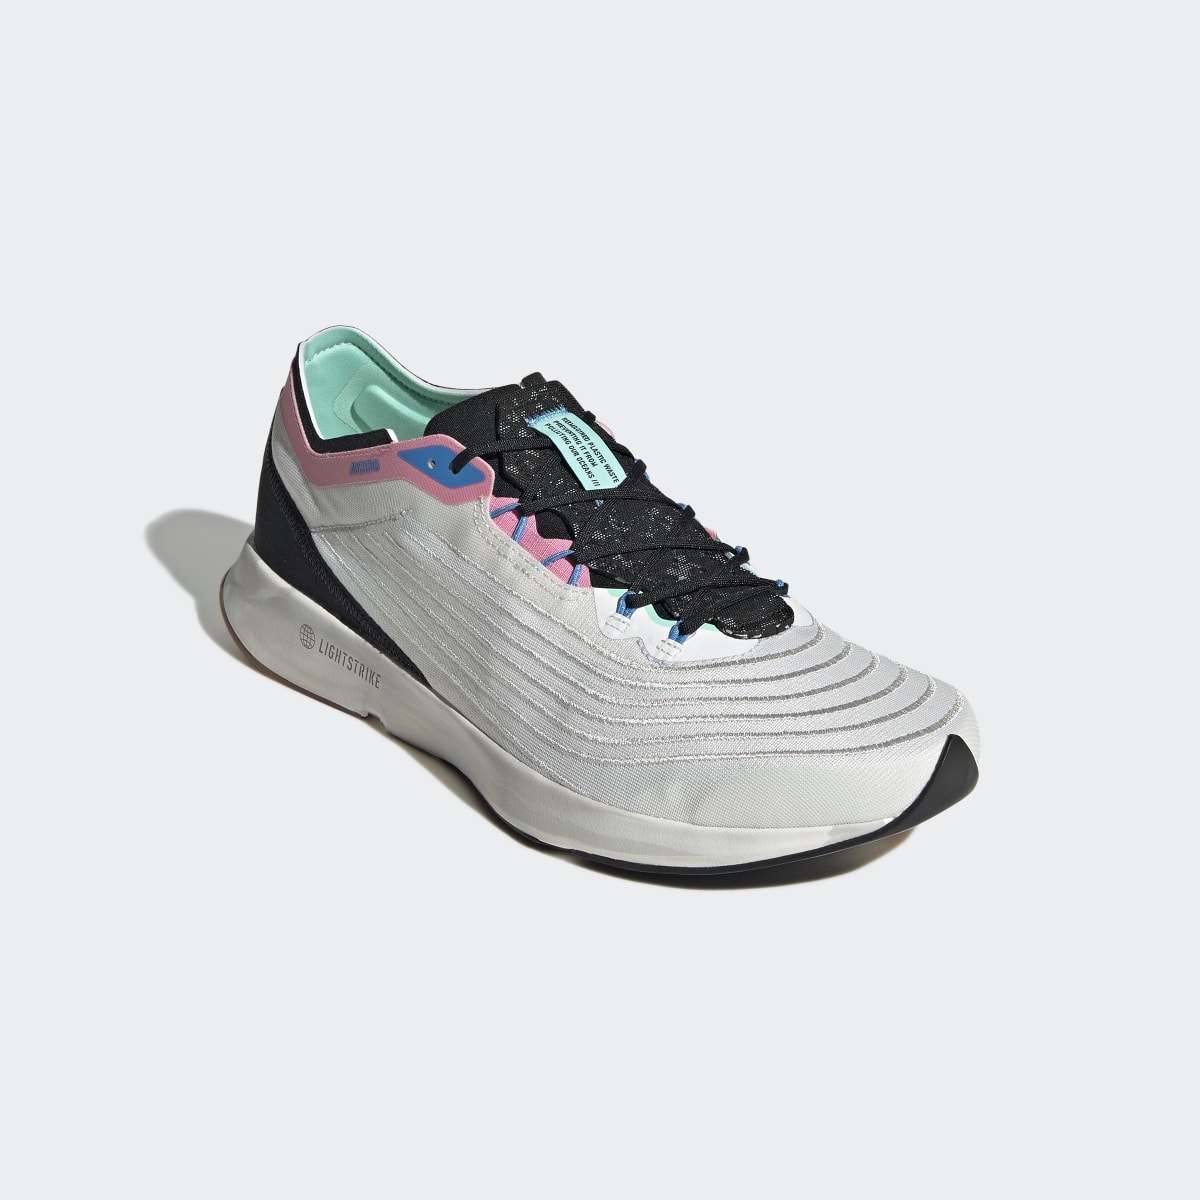 Adidas Adizero Lightstrike Running Shoes Low. 5